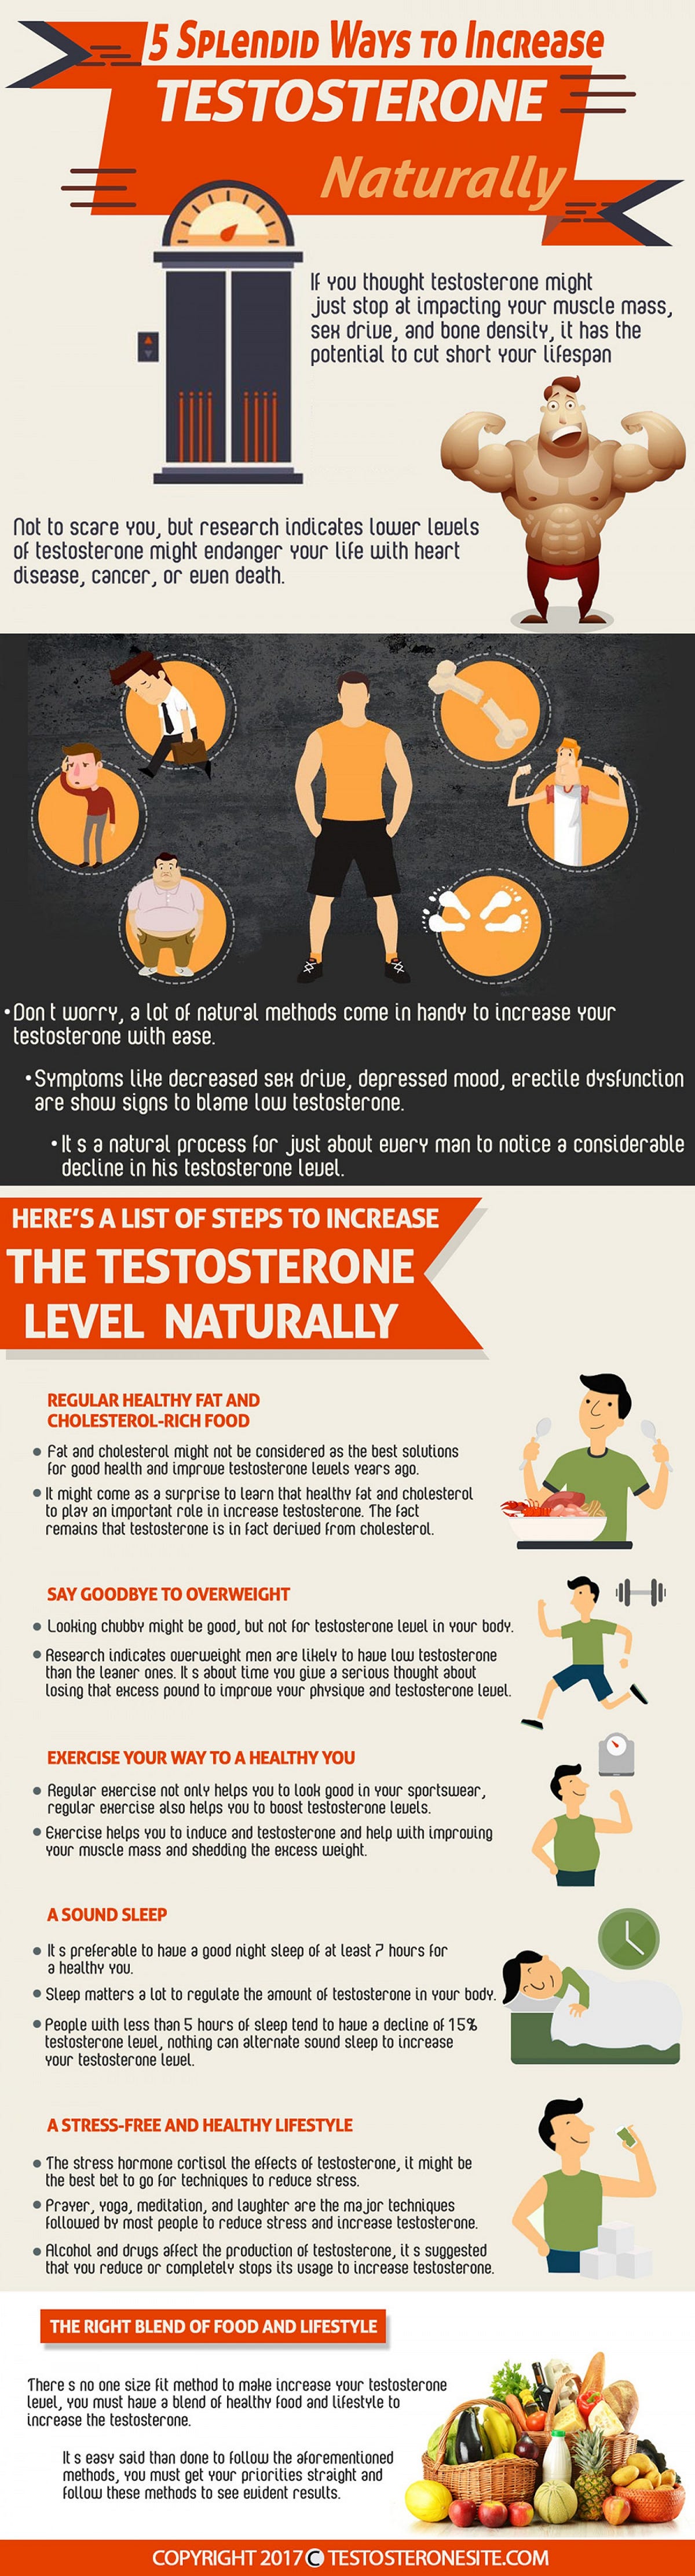 Increase to natural testosterone methods 6 Ways